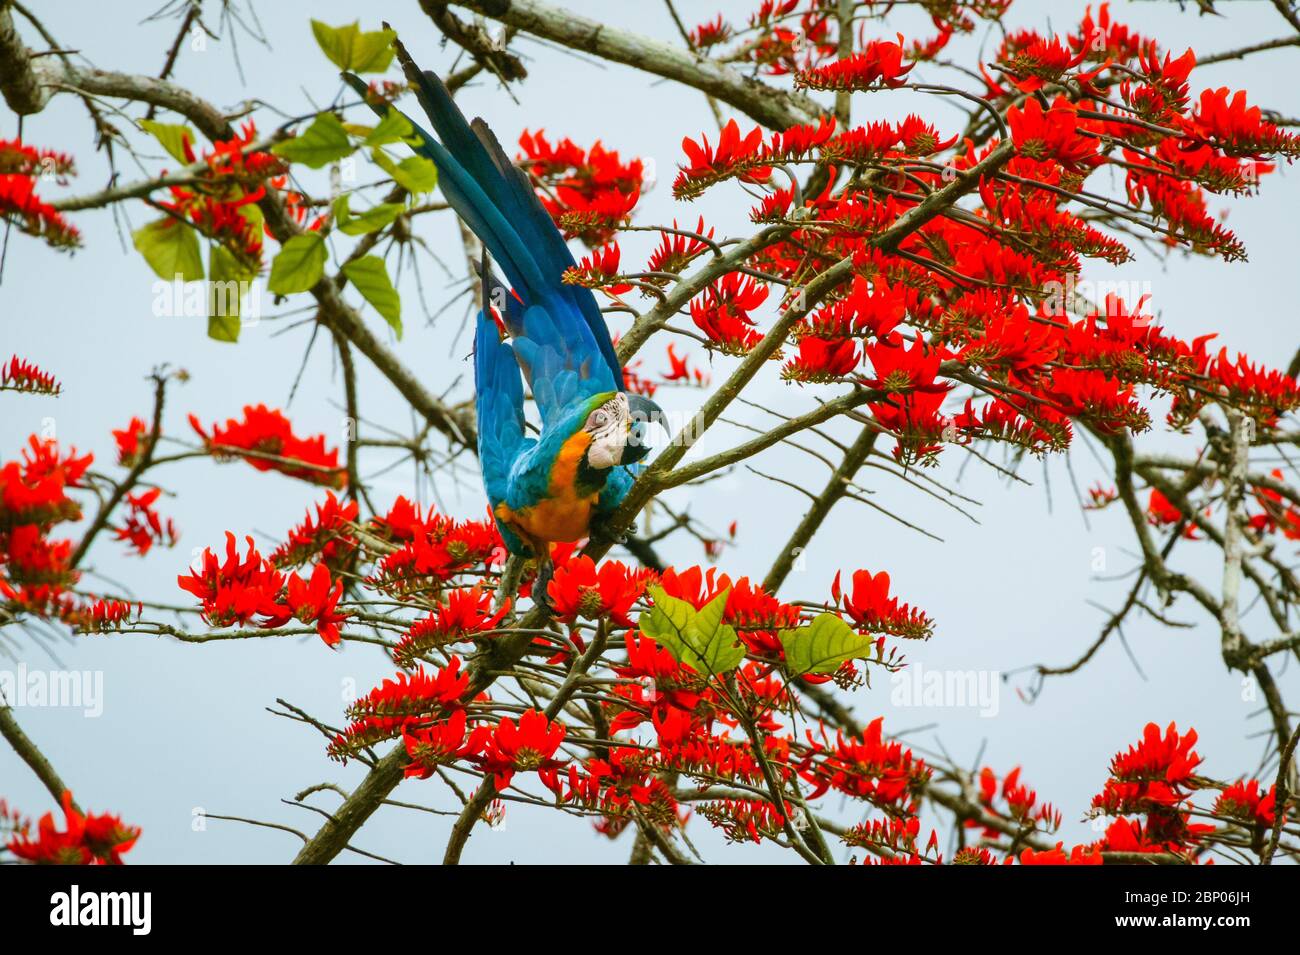 Blue-and-gold macaw, Ara ararauna, in the rainforest at Cana field station, Darien national park, Darien province, Republic of Panama. Stock Photo